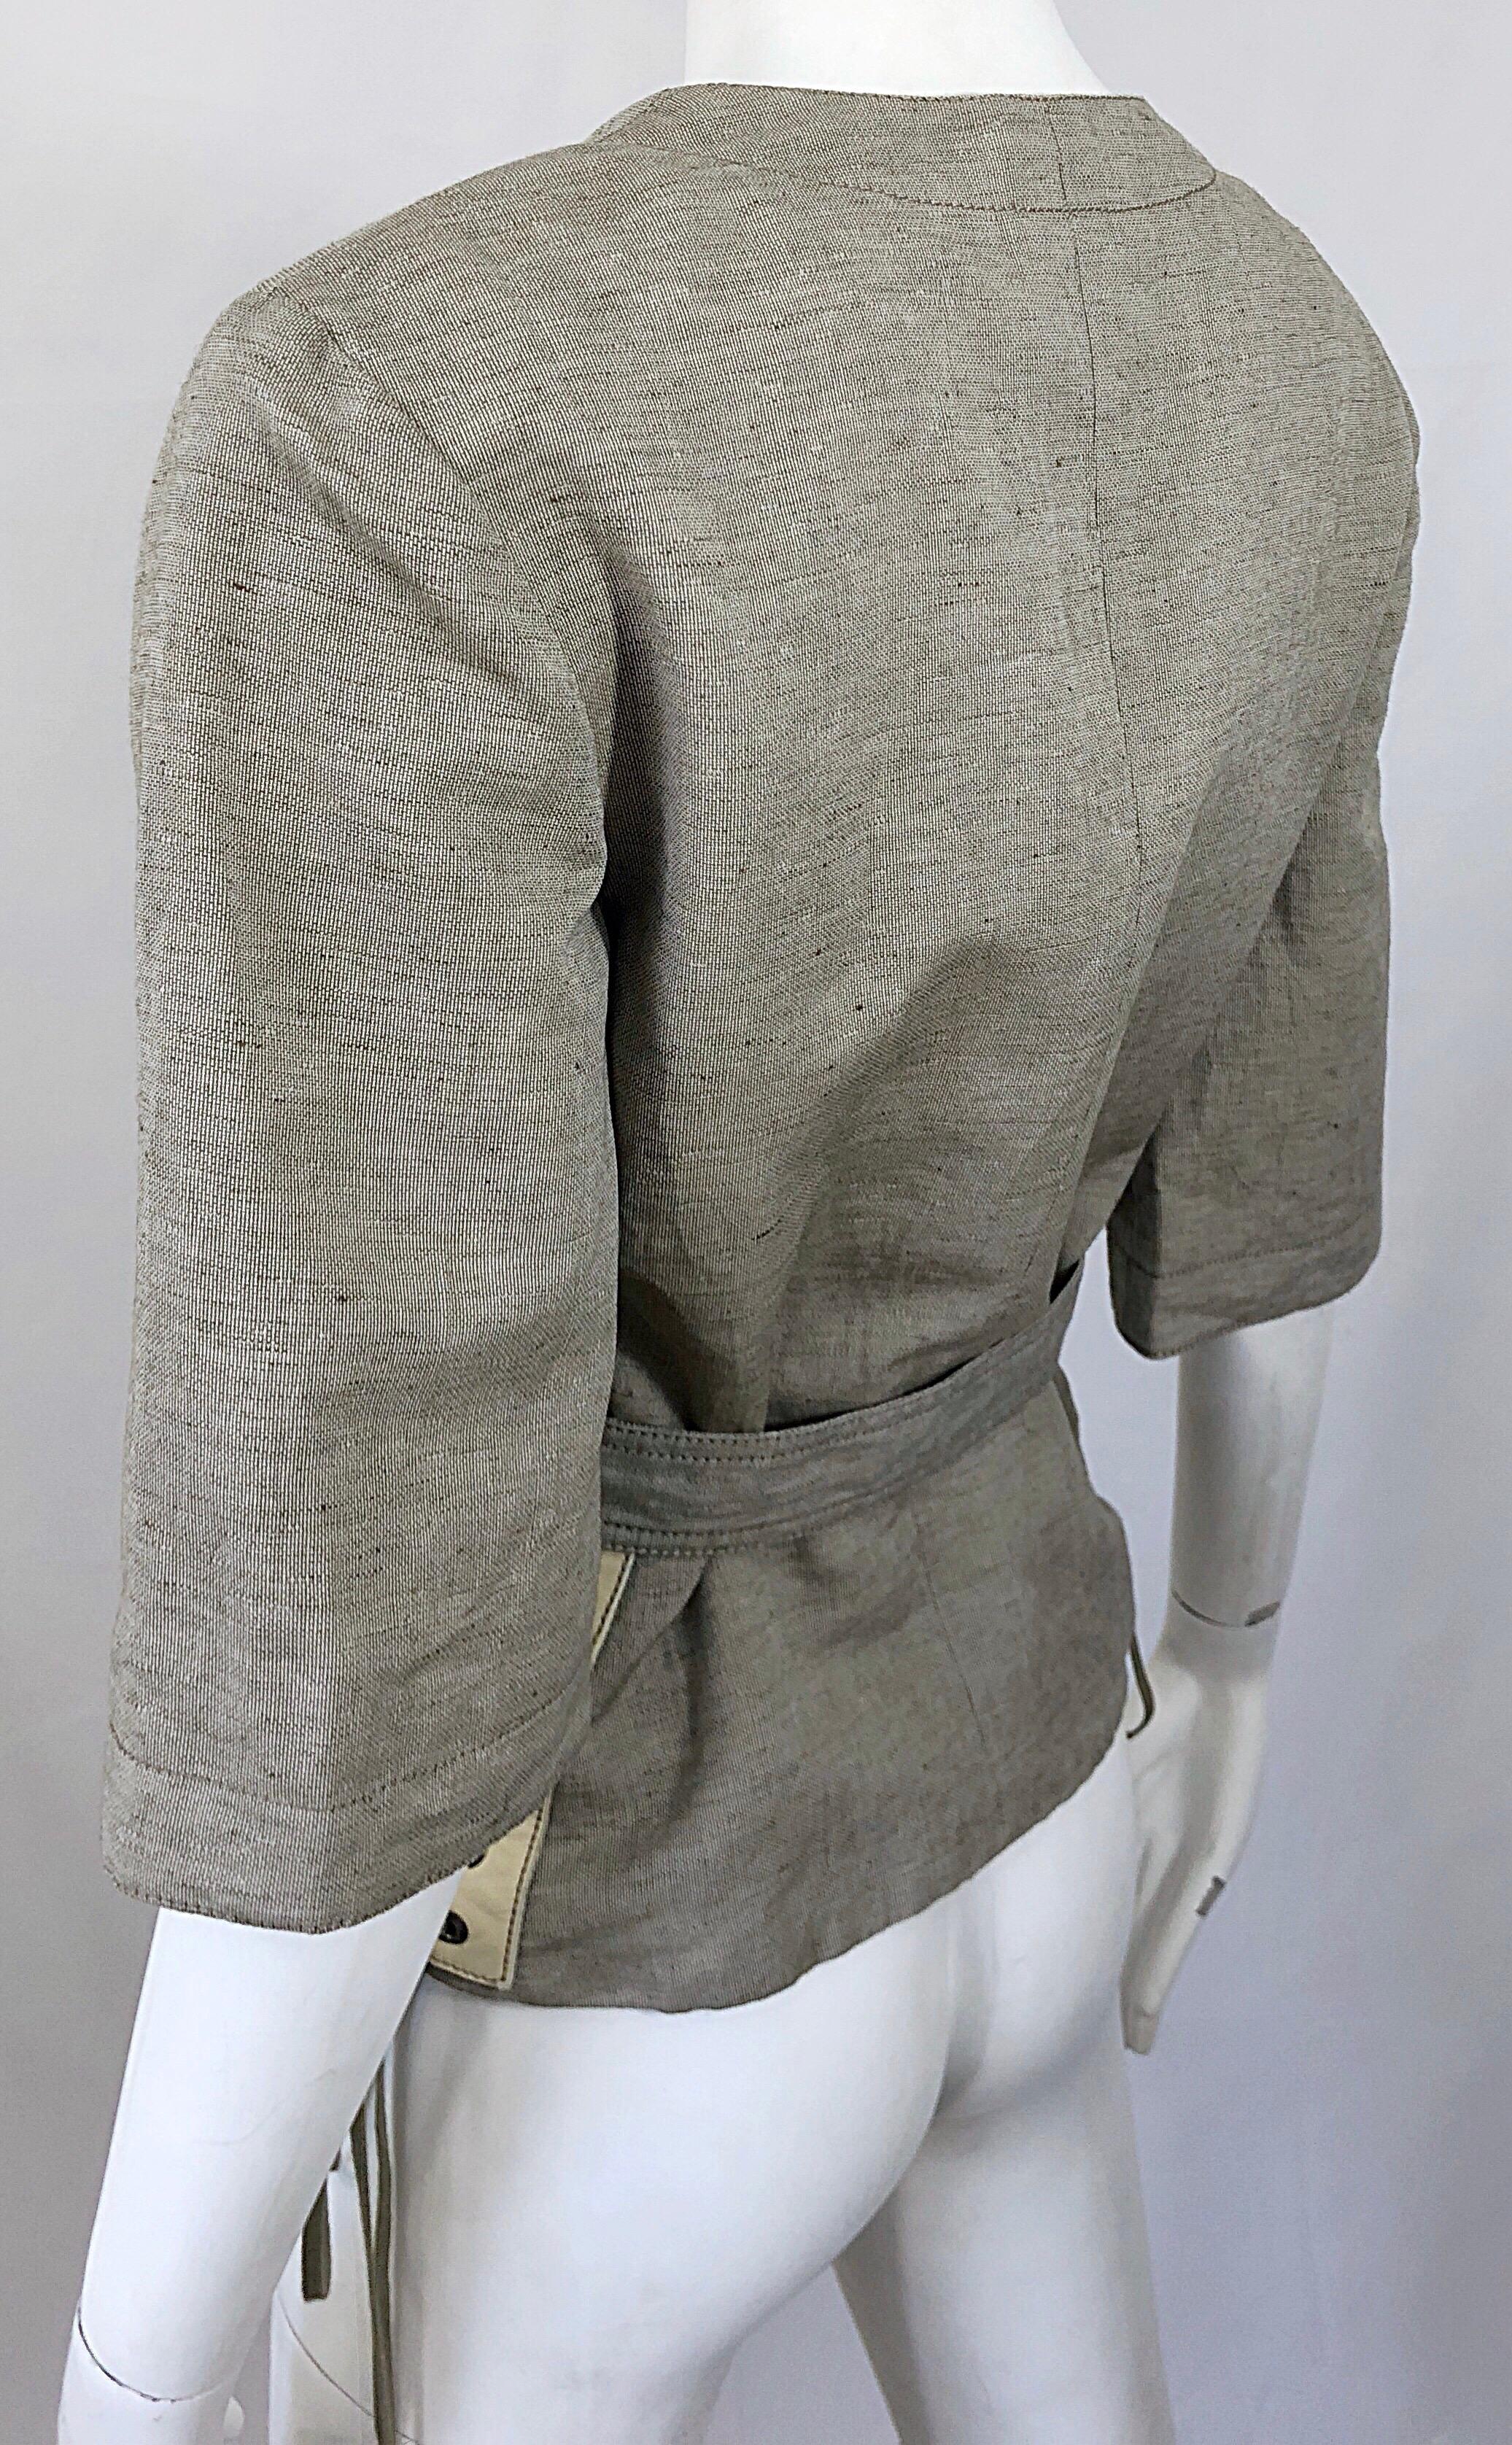 Chloe 1990s Stella McCartney Beige Khaki Linen Short Sleeve Safari Top Jacket For Sale 1